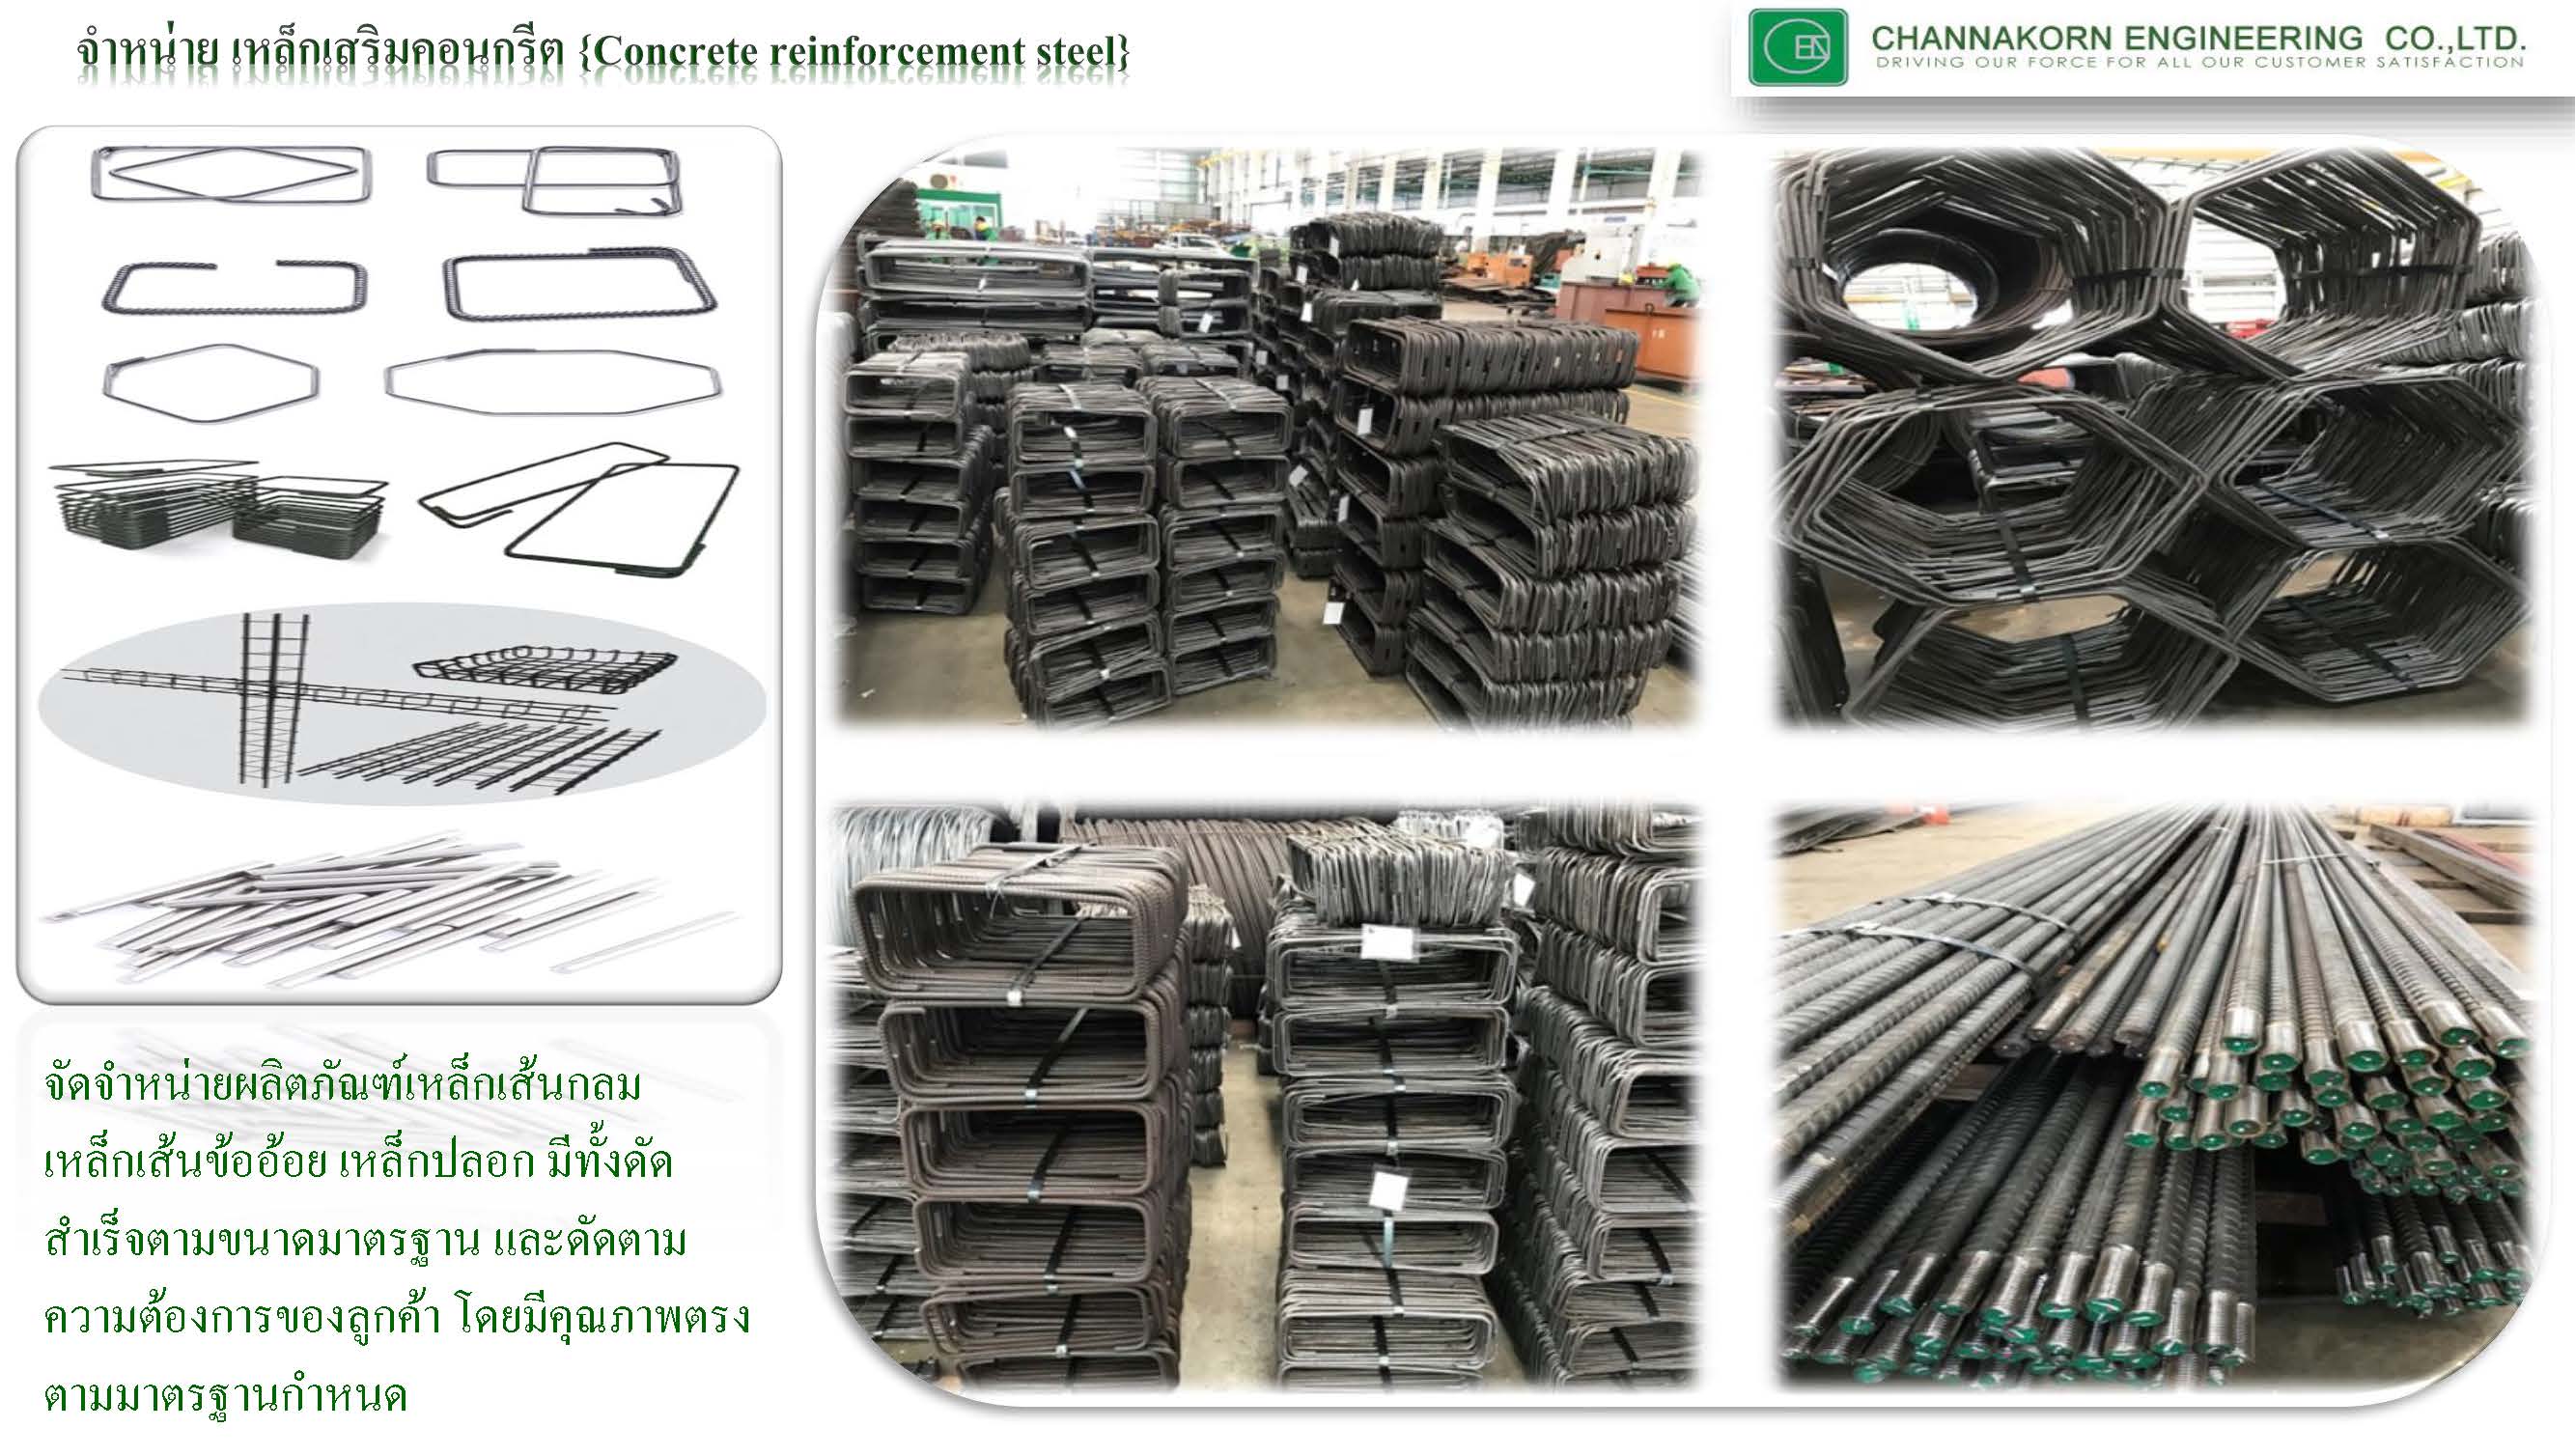 Sell Concrete reinforcement steel - Channakorn Engineering Co.,Ltd.